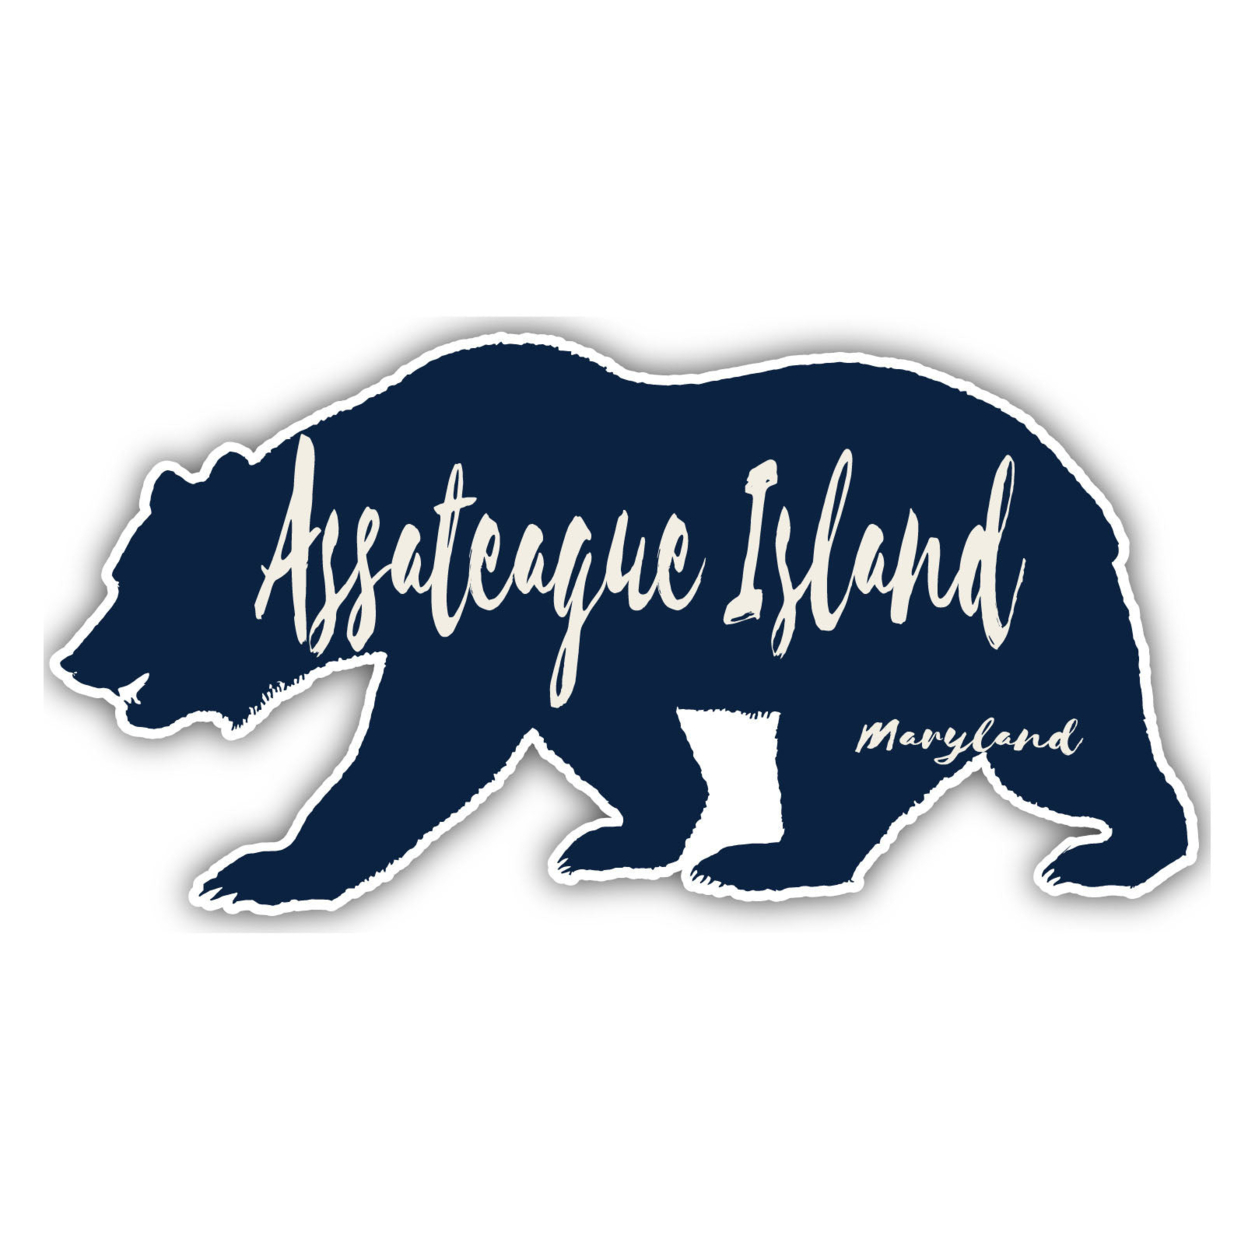 Assateague Island Maryland Souvenir Decorative Stickers (Choose Theme And Size) - Single Unit, 6-Inch, Bear